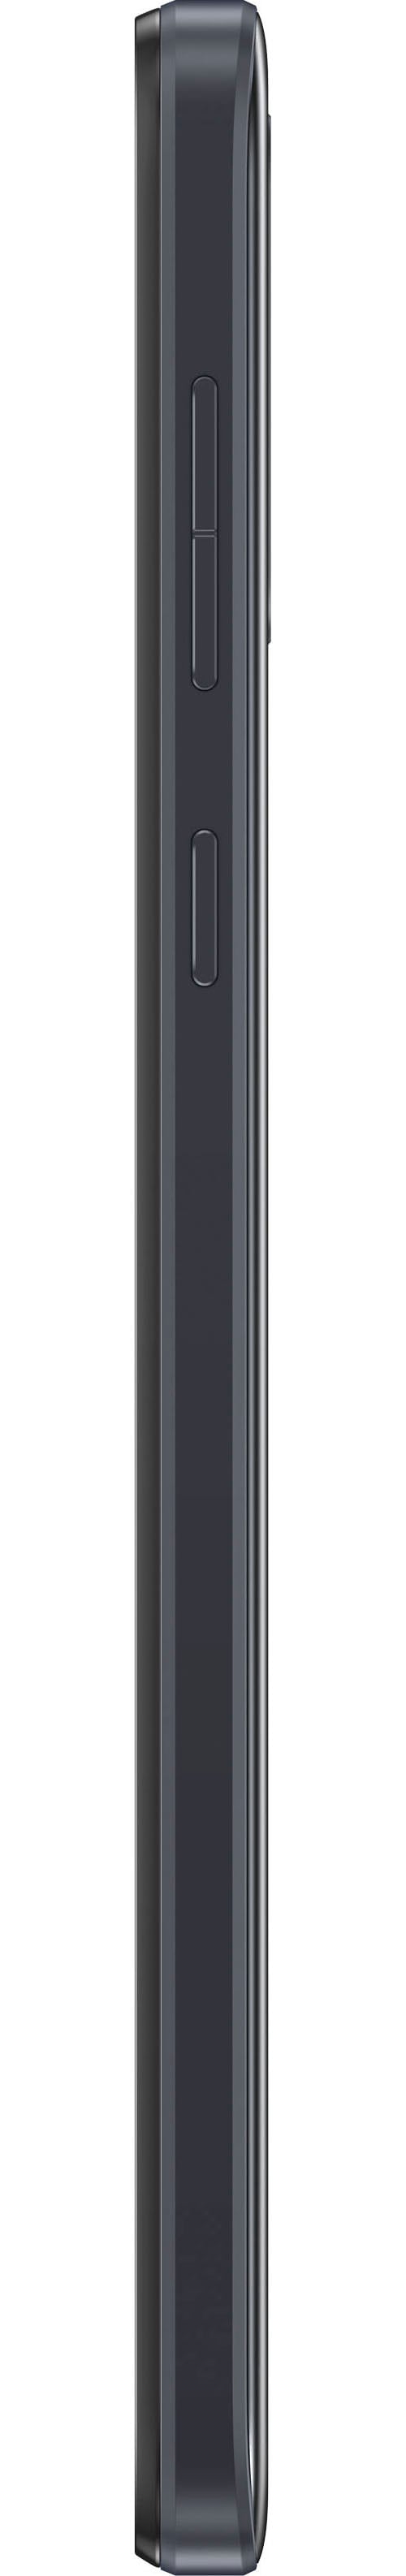 Motorola Smartphone »moto E13«, Cosmic Schwarz, 16,56 cm/6,52 Zoll, 128 GB Speicherplatz, 13 MP Kamera